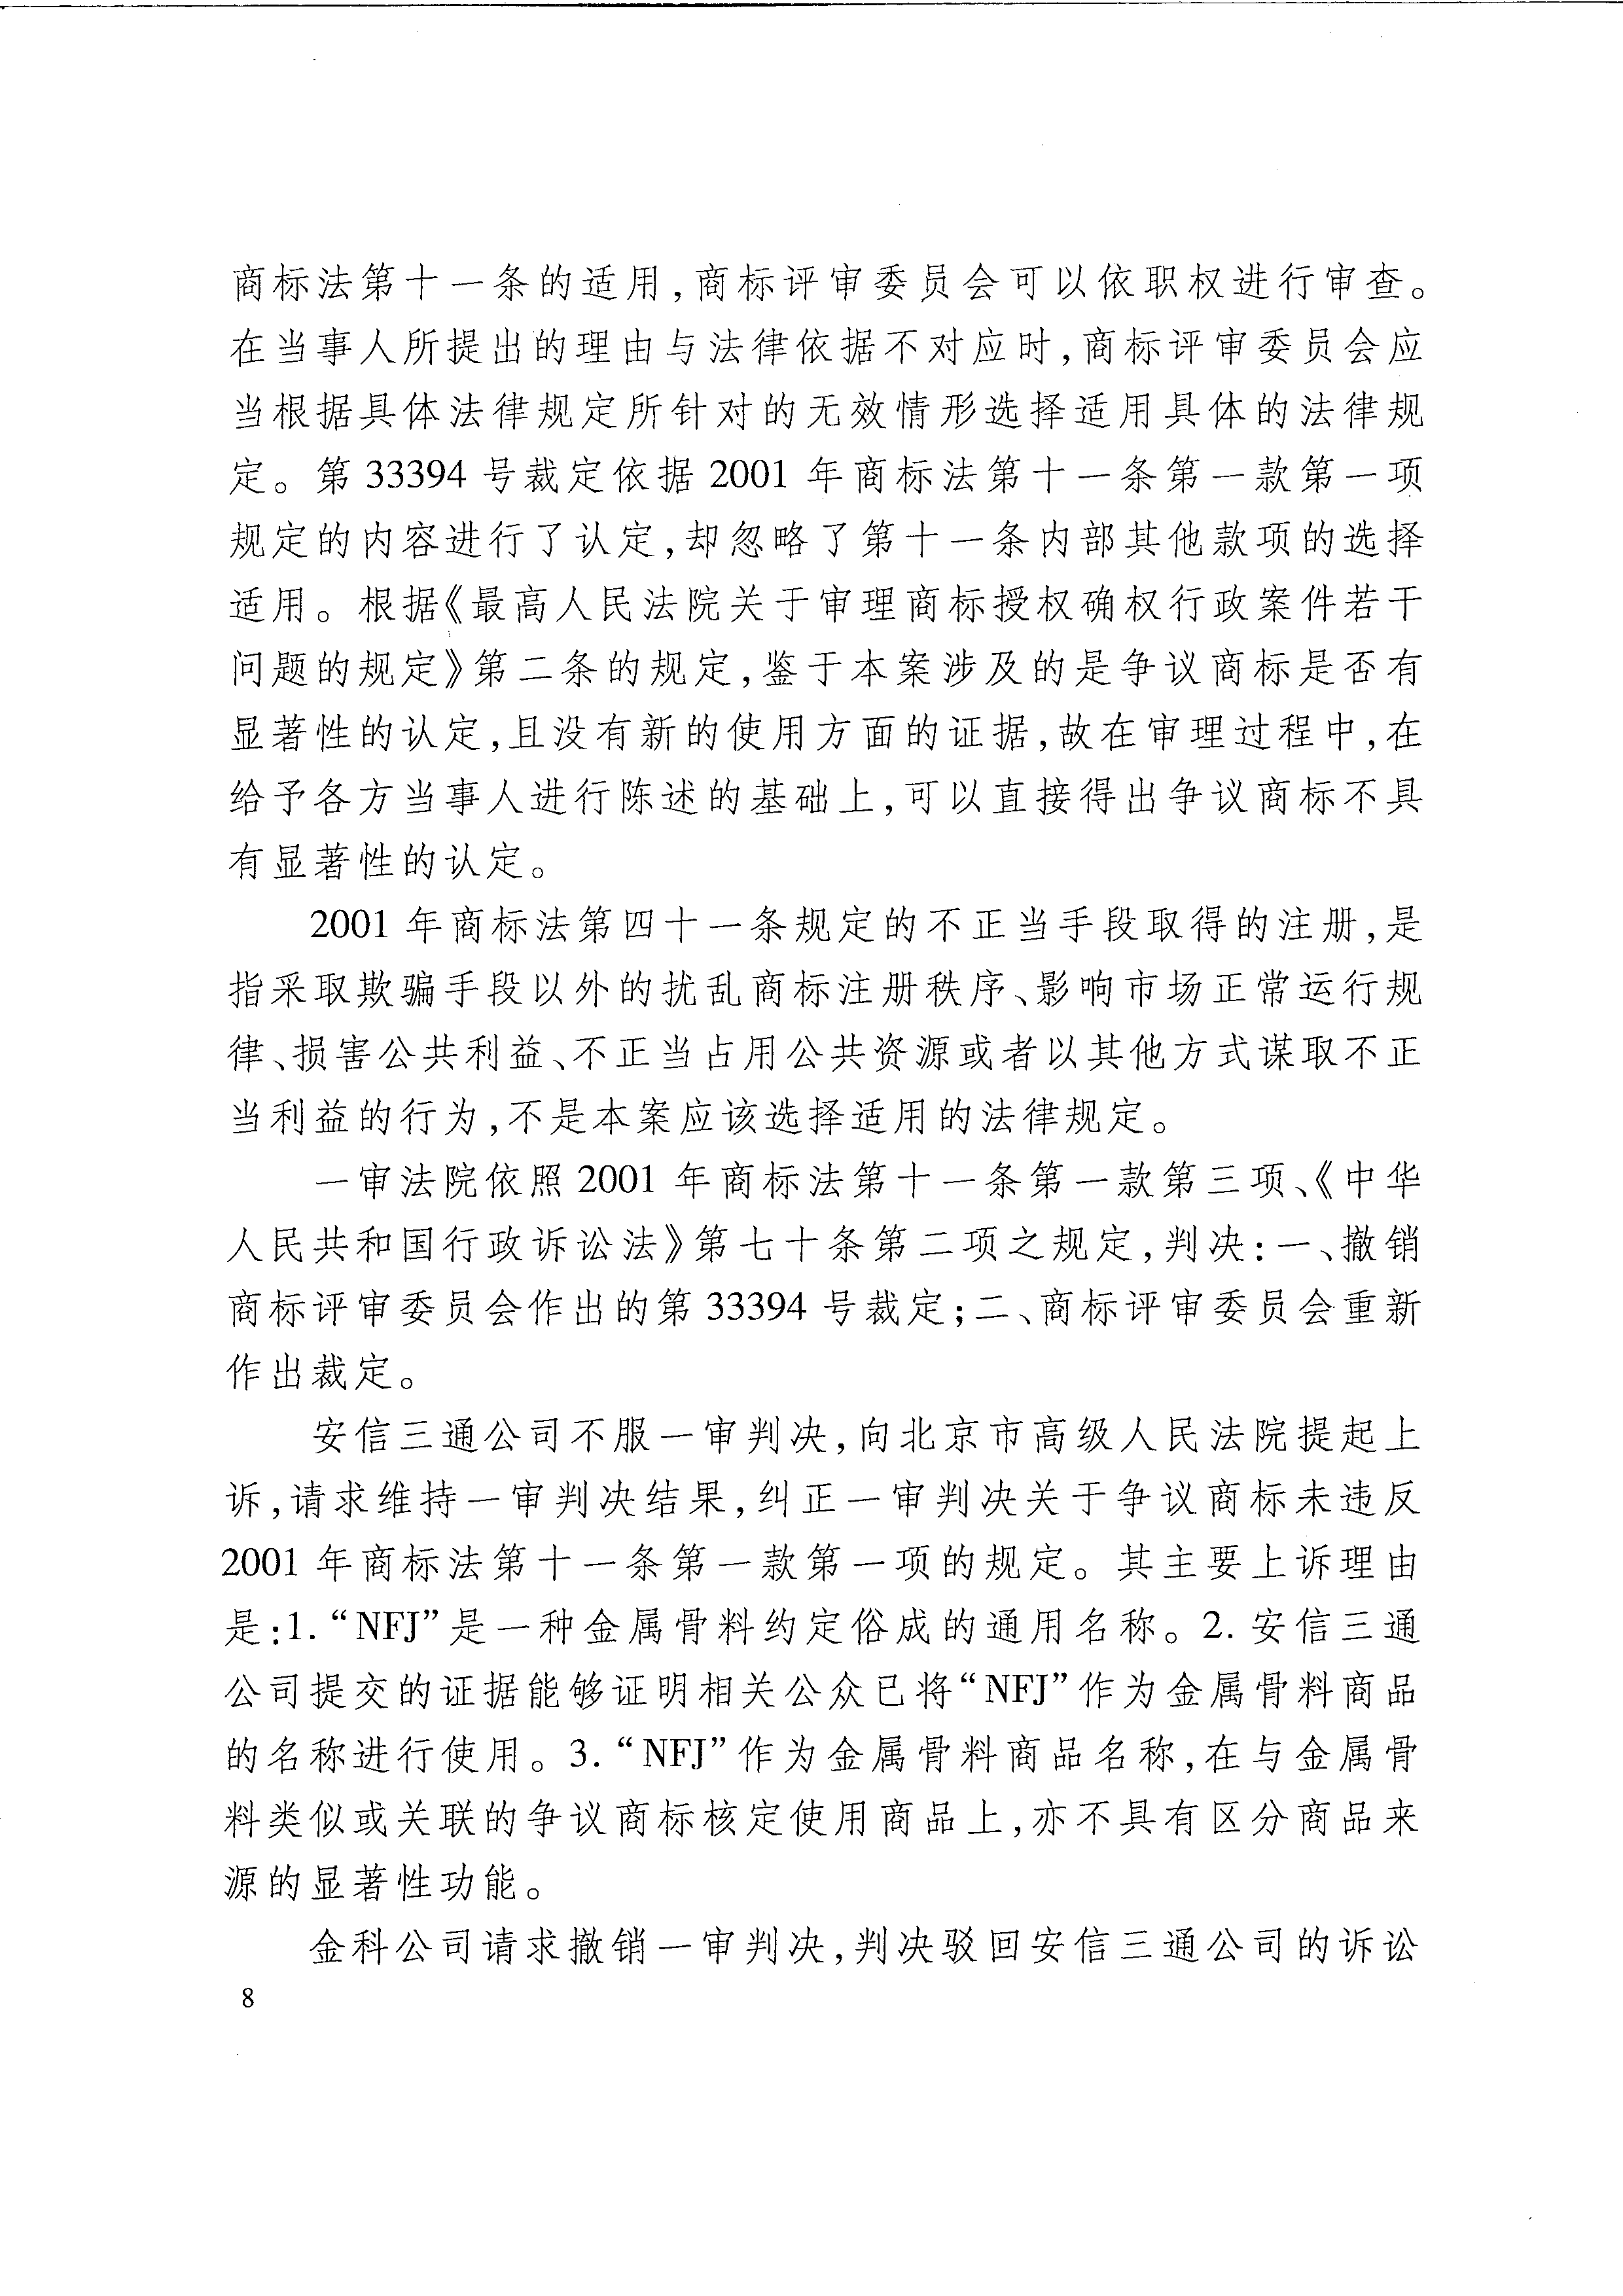 再审行政判决书(1)_Page_08.png